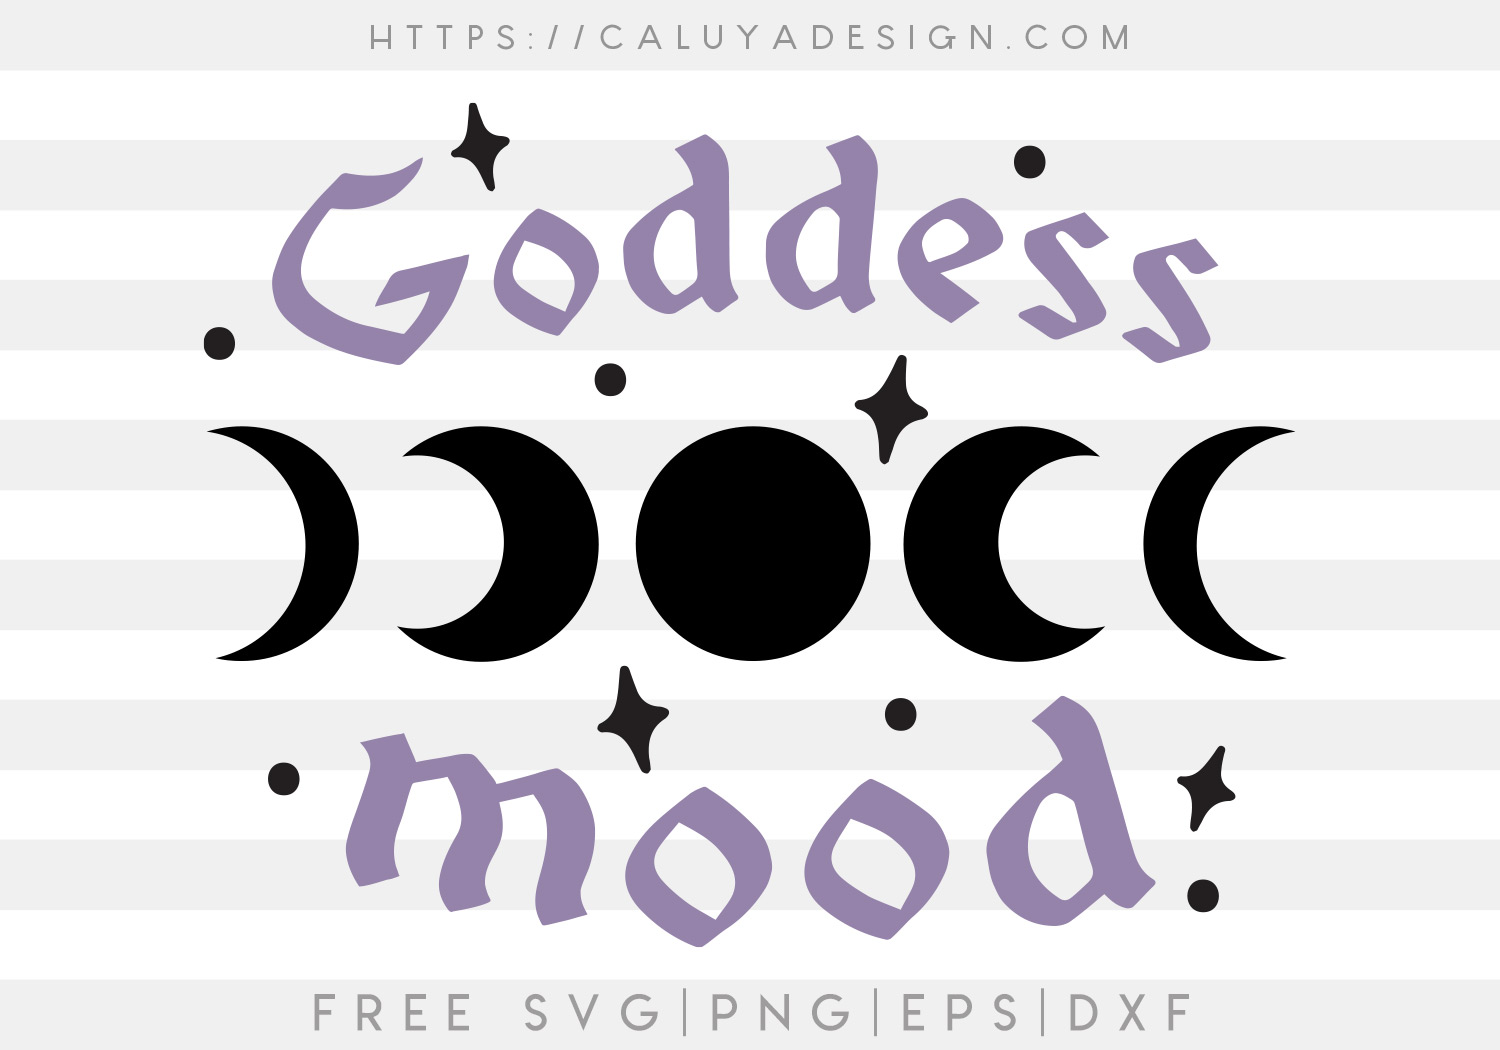 Free Goddess Mood SVG